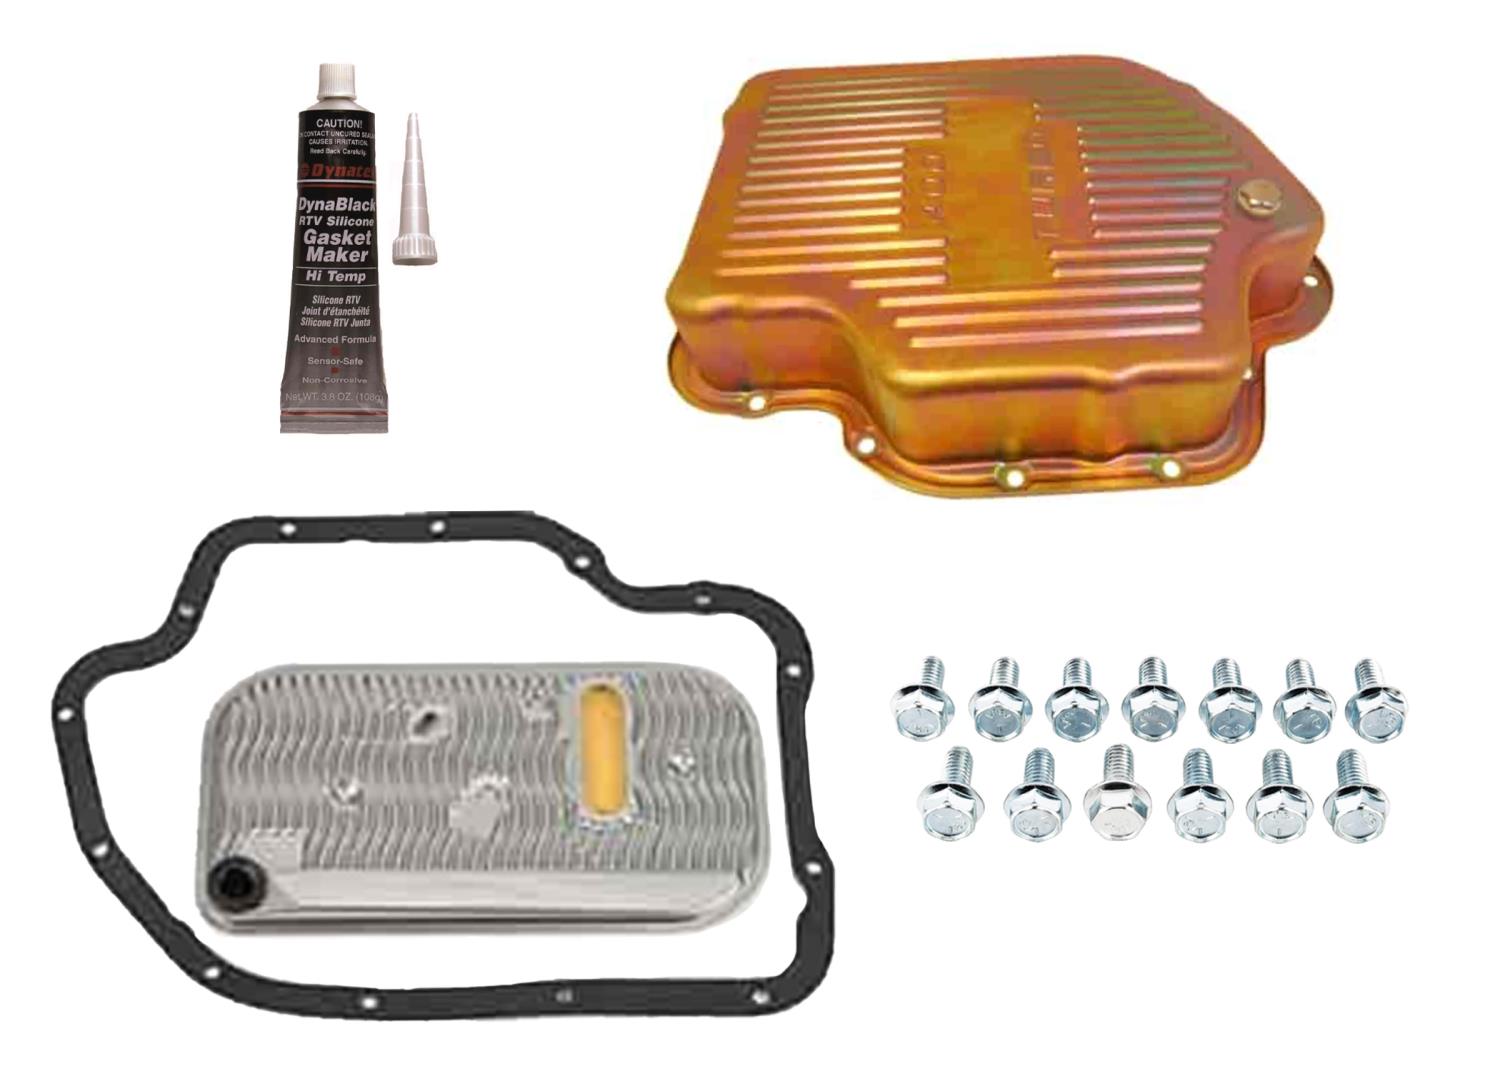 R9197Z Steel Transmission Pan Kit for GM Turbo 400 Transmission [Zinc Finish]